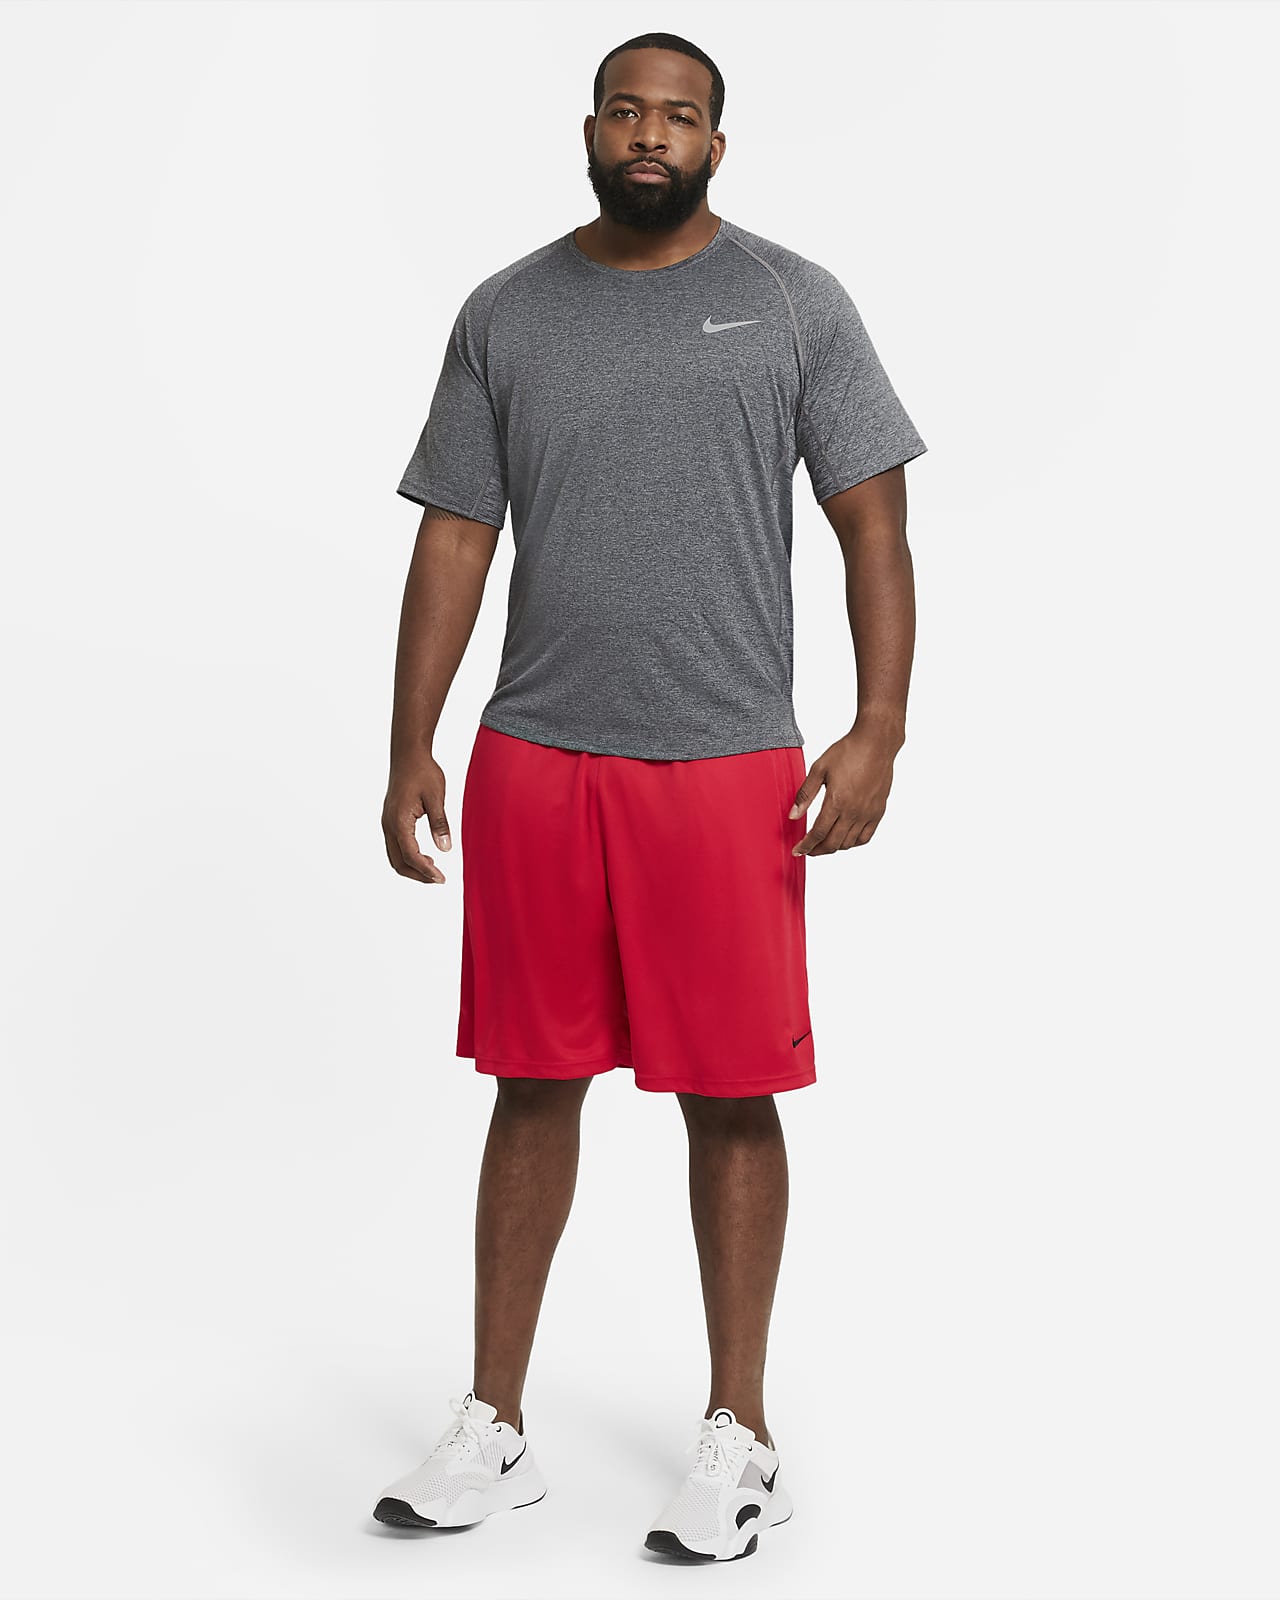 Nike, Shorts, Nike Workout Bundle 2 In Shorts And Sports Bra